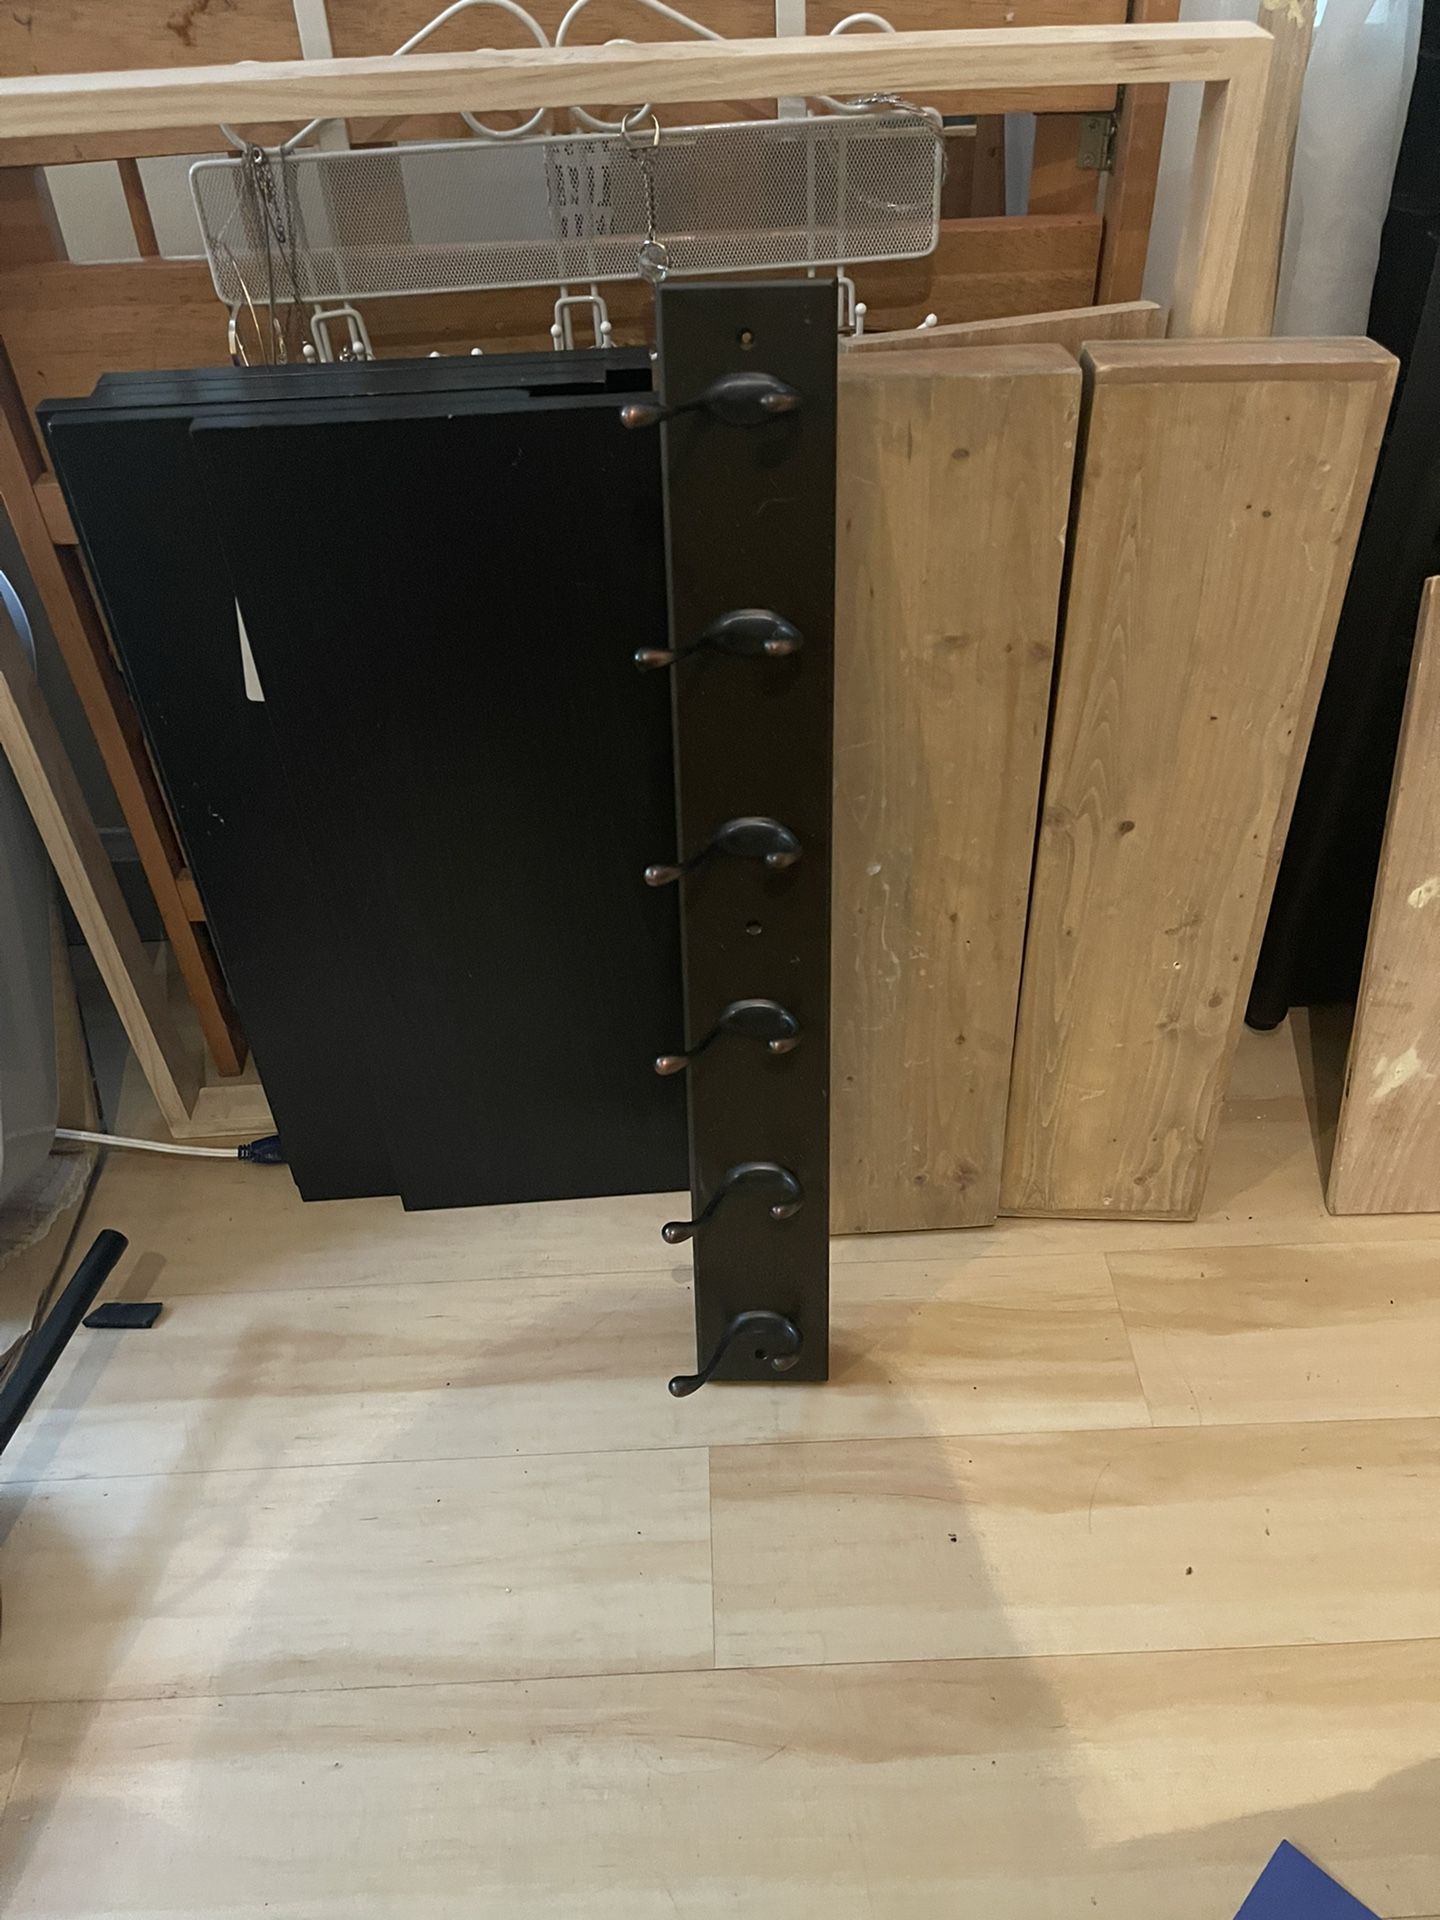 Shelves! 5 Black, 2 Floating Wood, And One Coat Rack